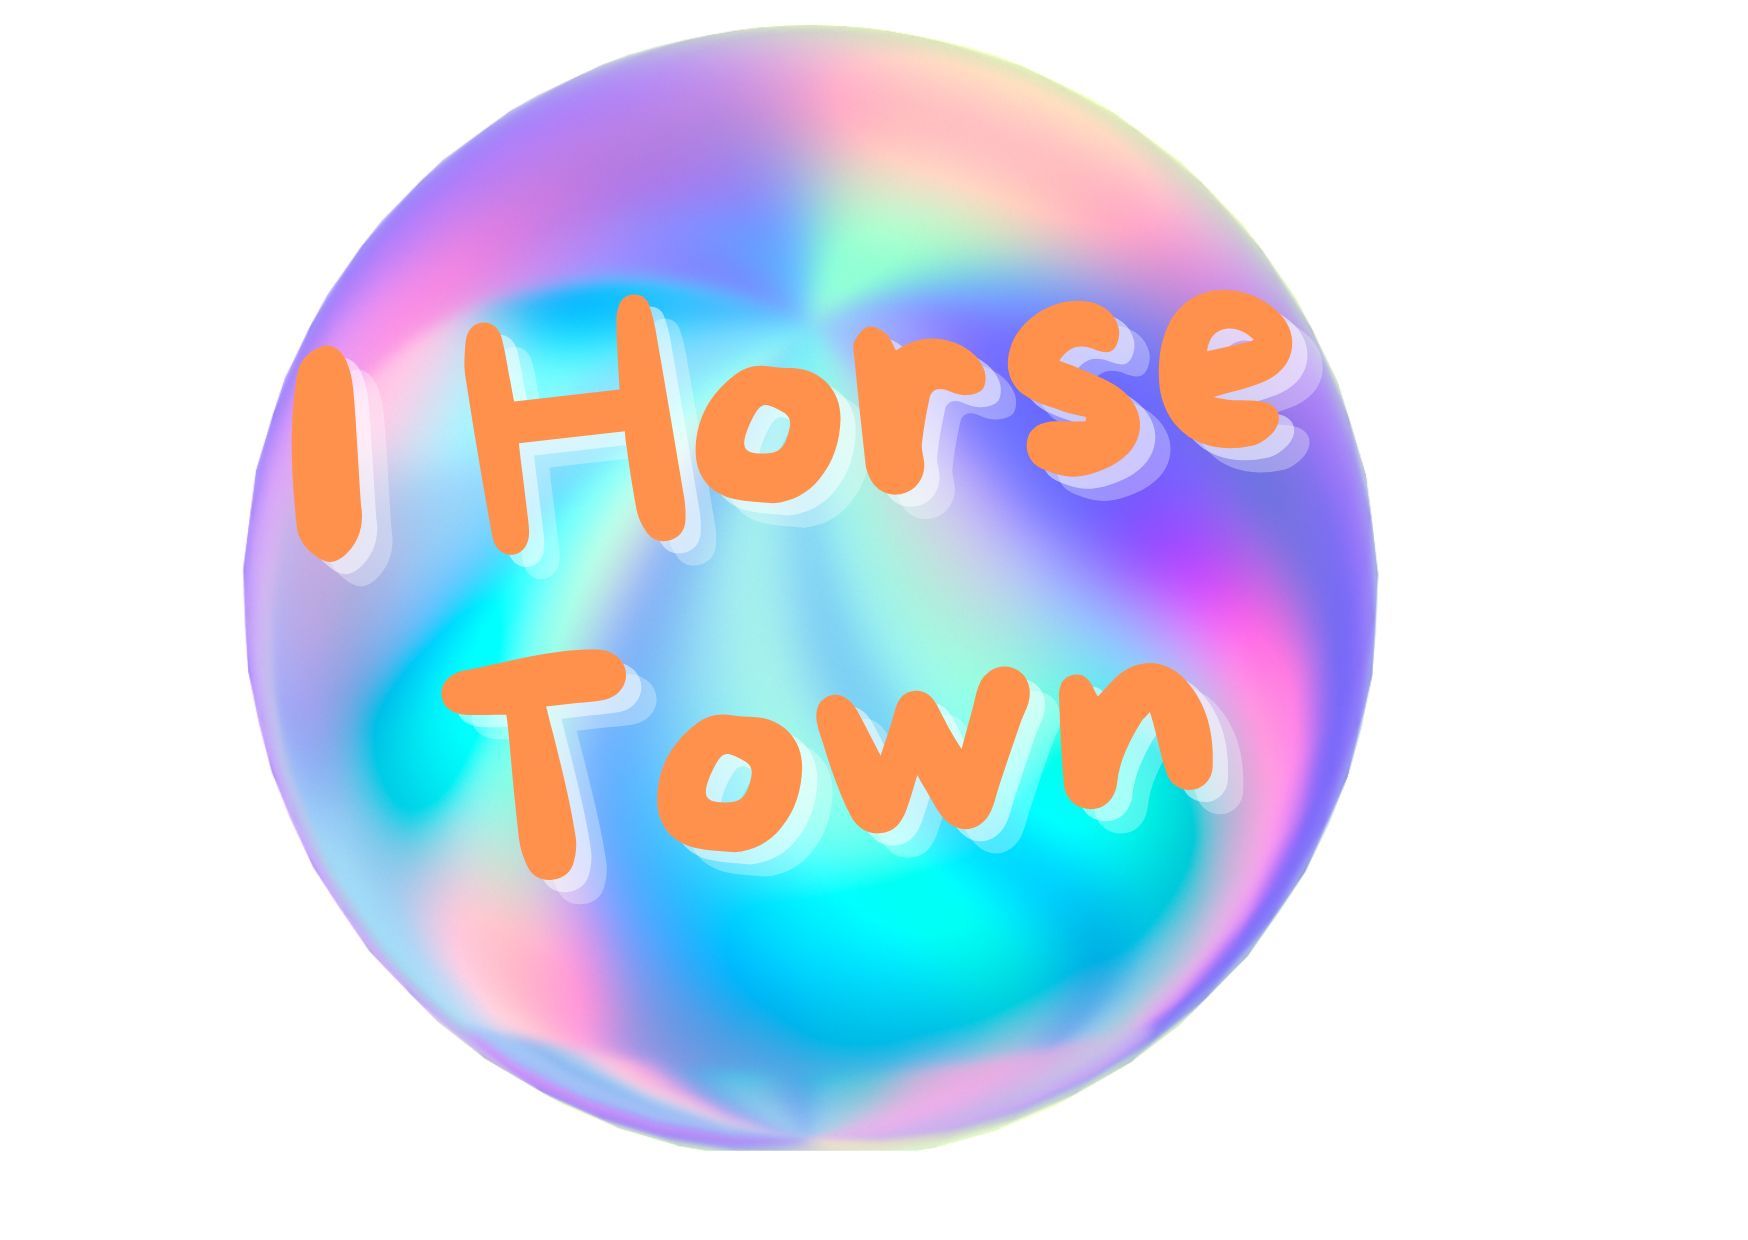 AinyFit Ltd 1-Horse-Town Pass